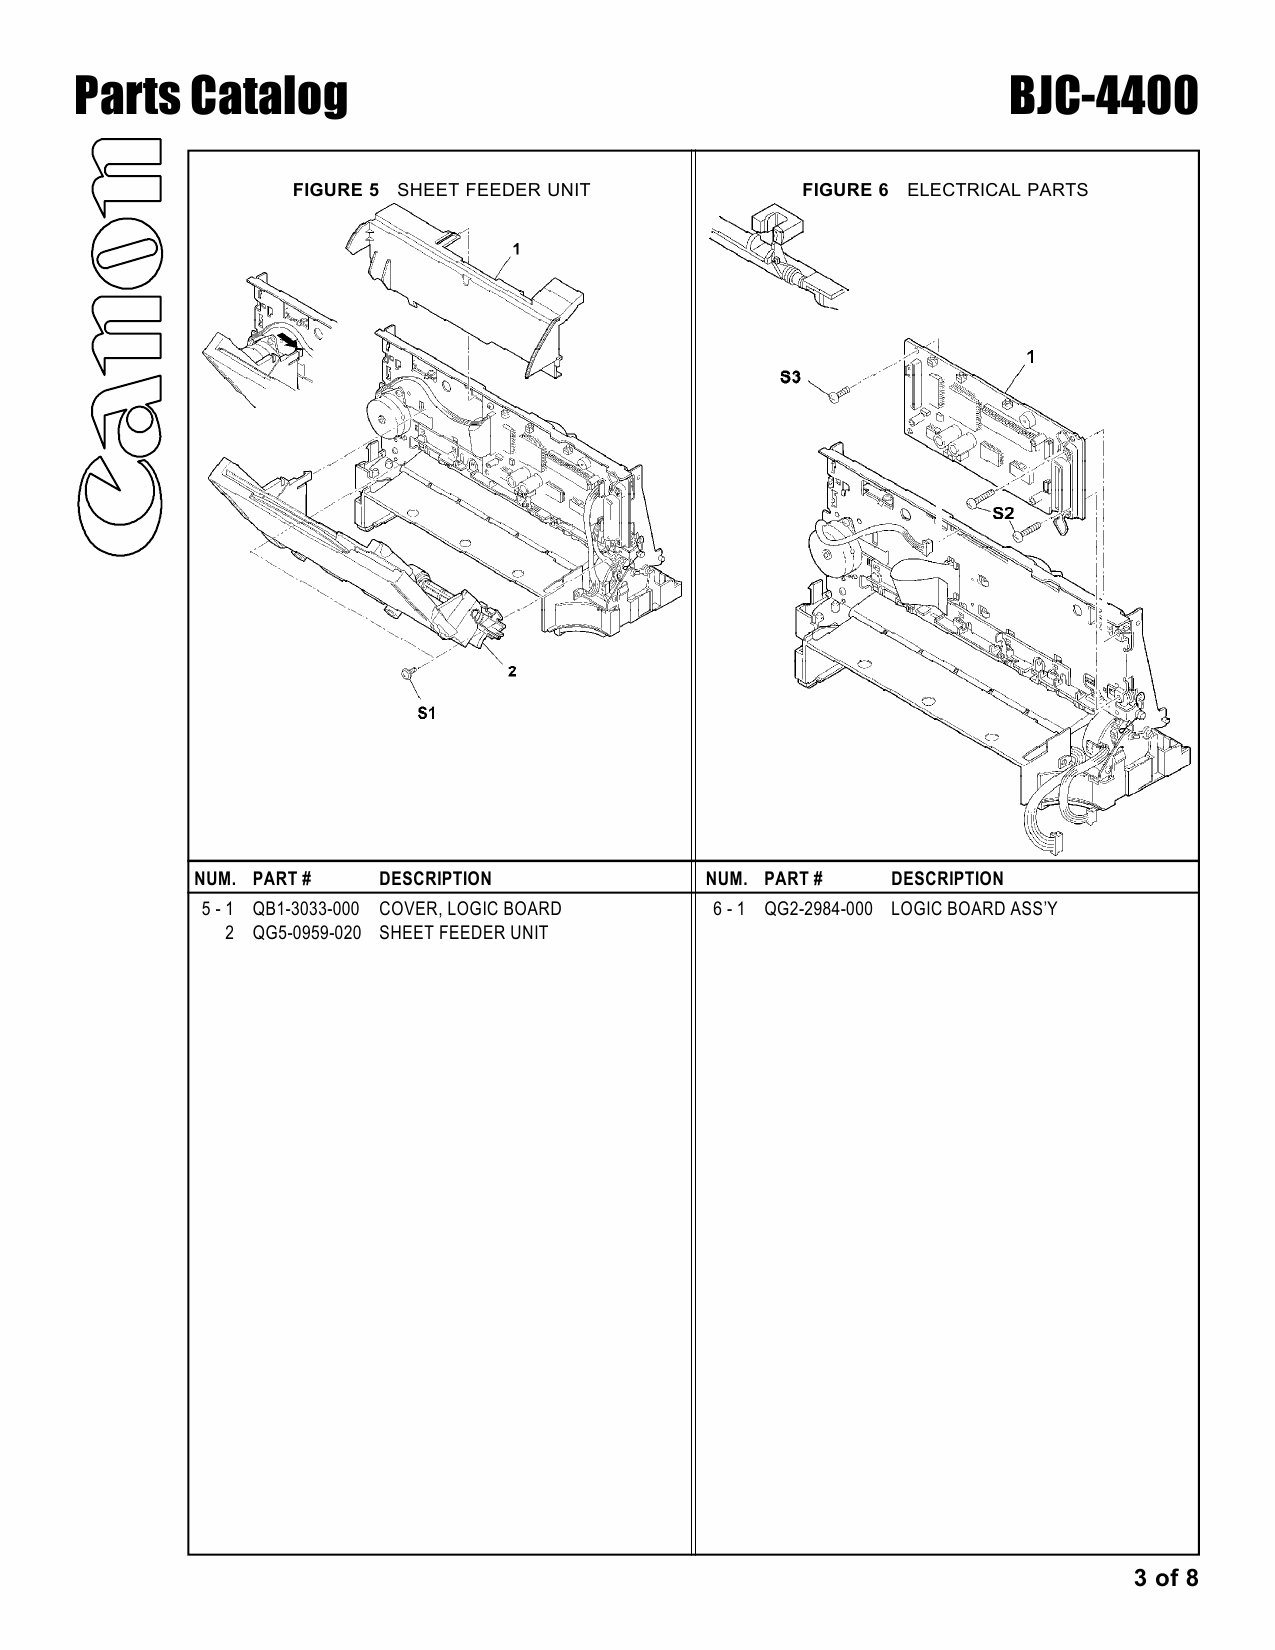 Canon BubbleJet BJC-4400 Parts Catalog Manual-3